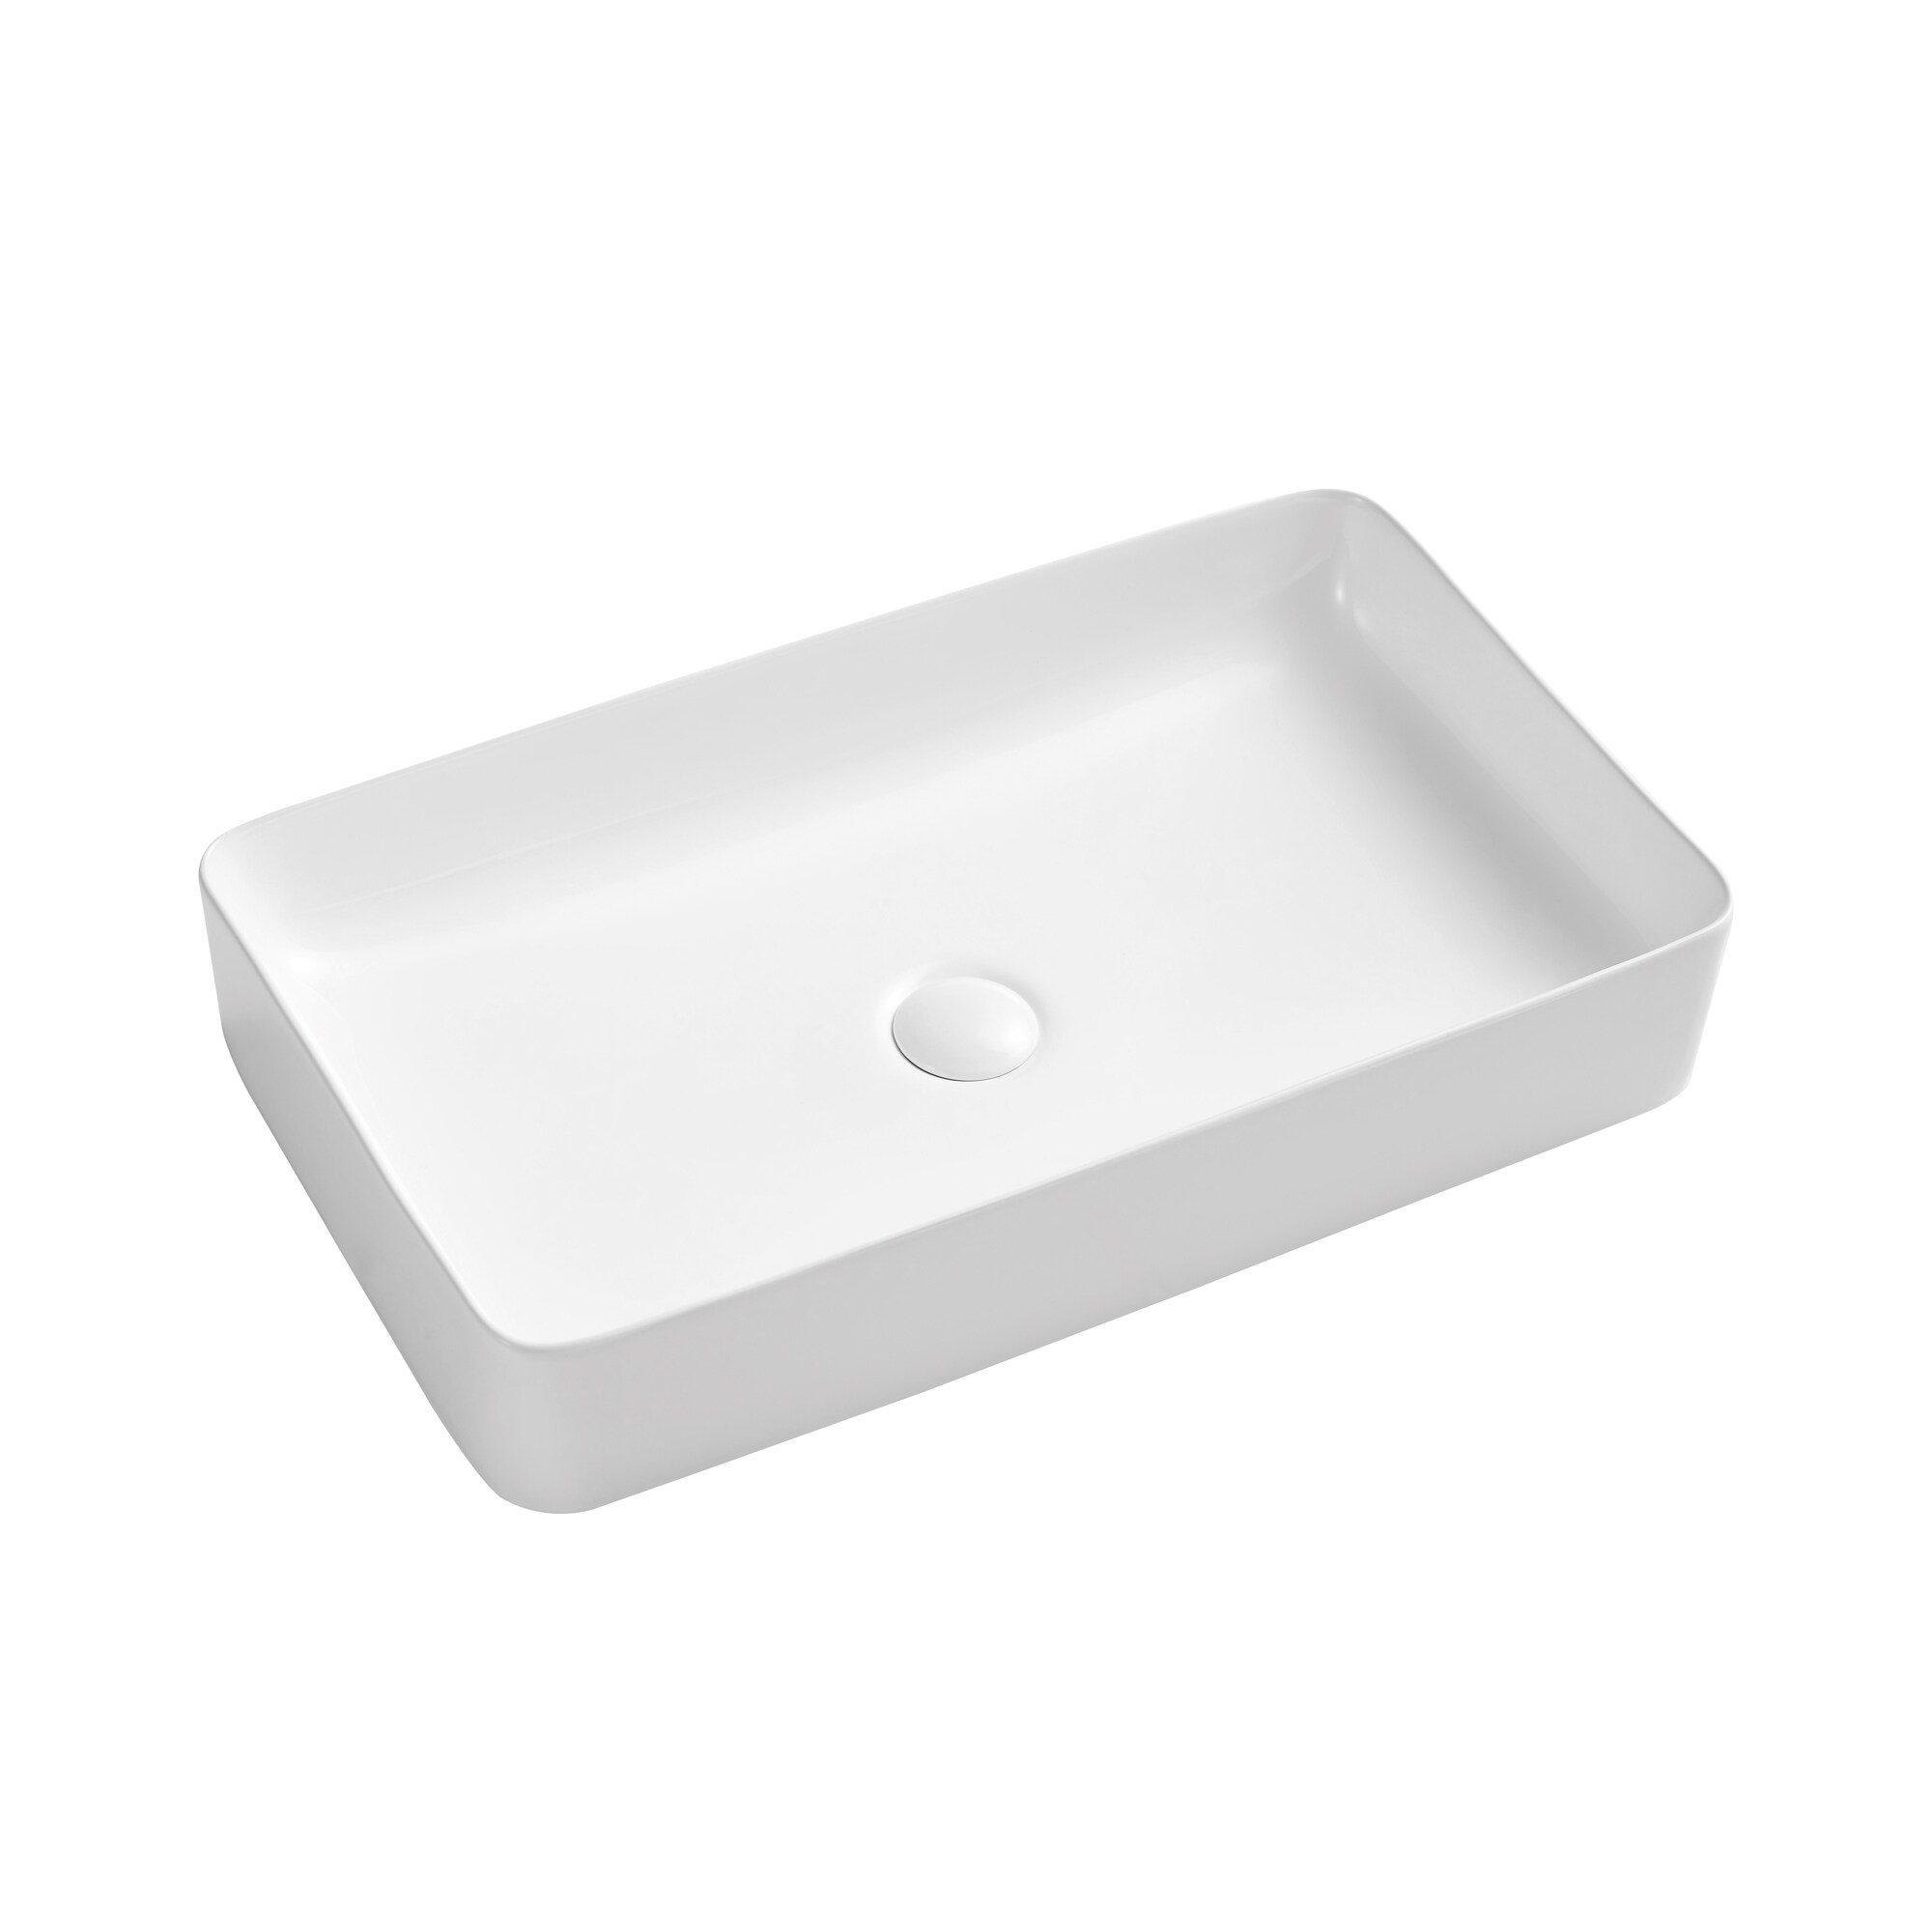 Clihome White Ceramic Vessel Rectangular Modern Bathroom Sink with ...